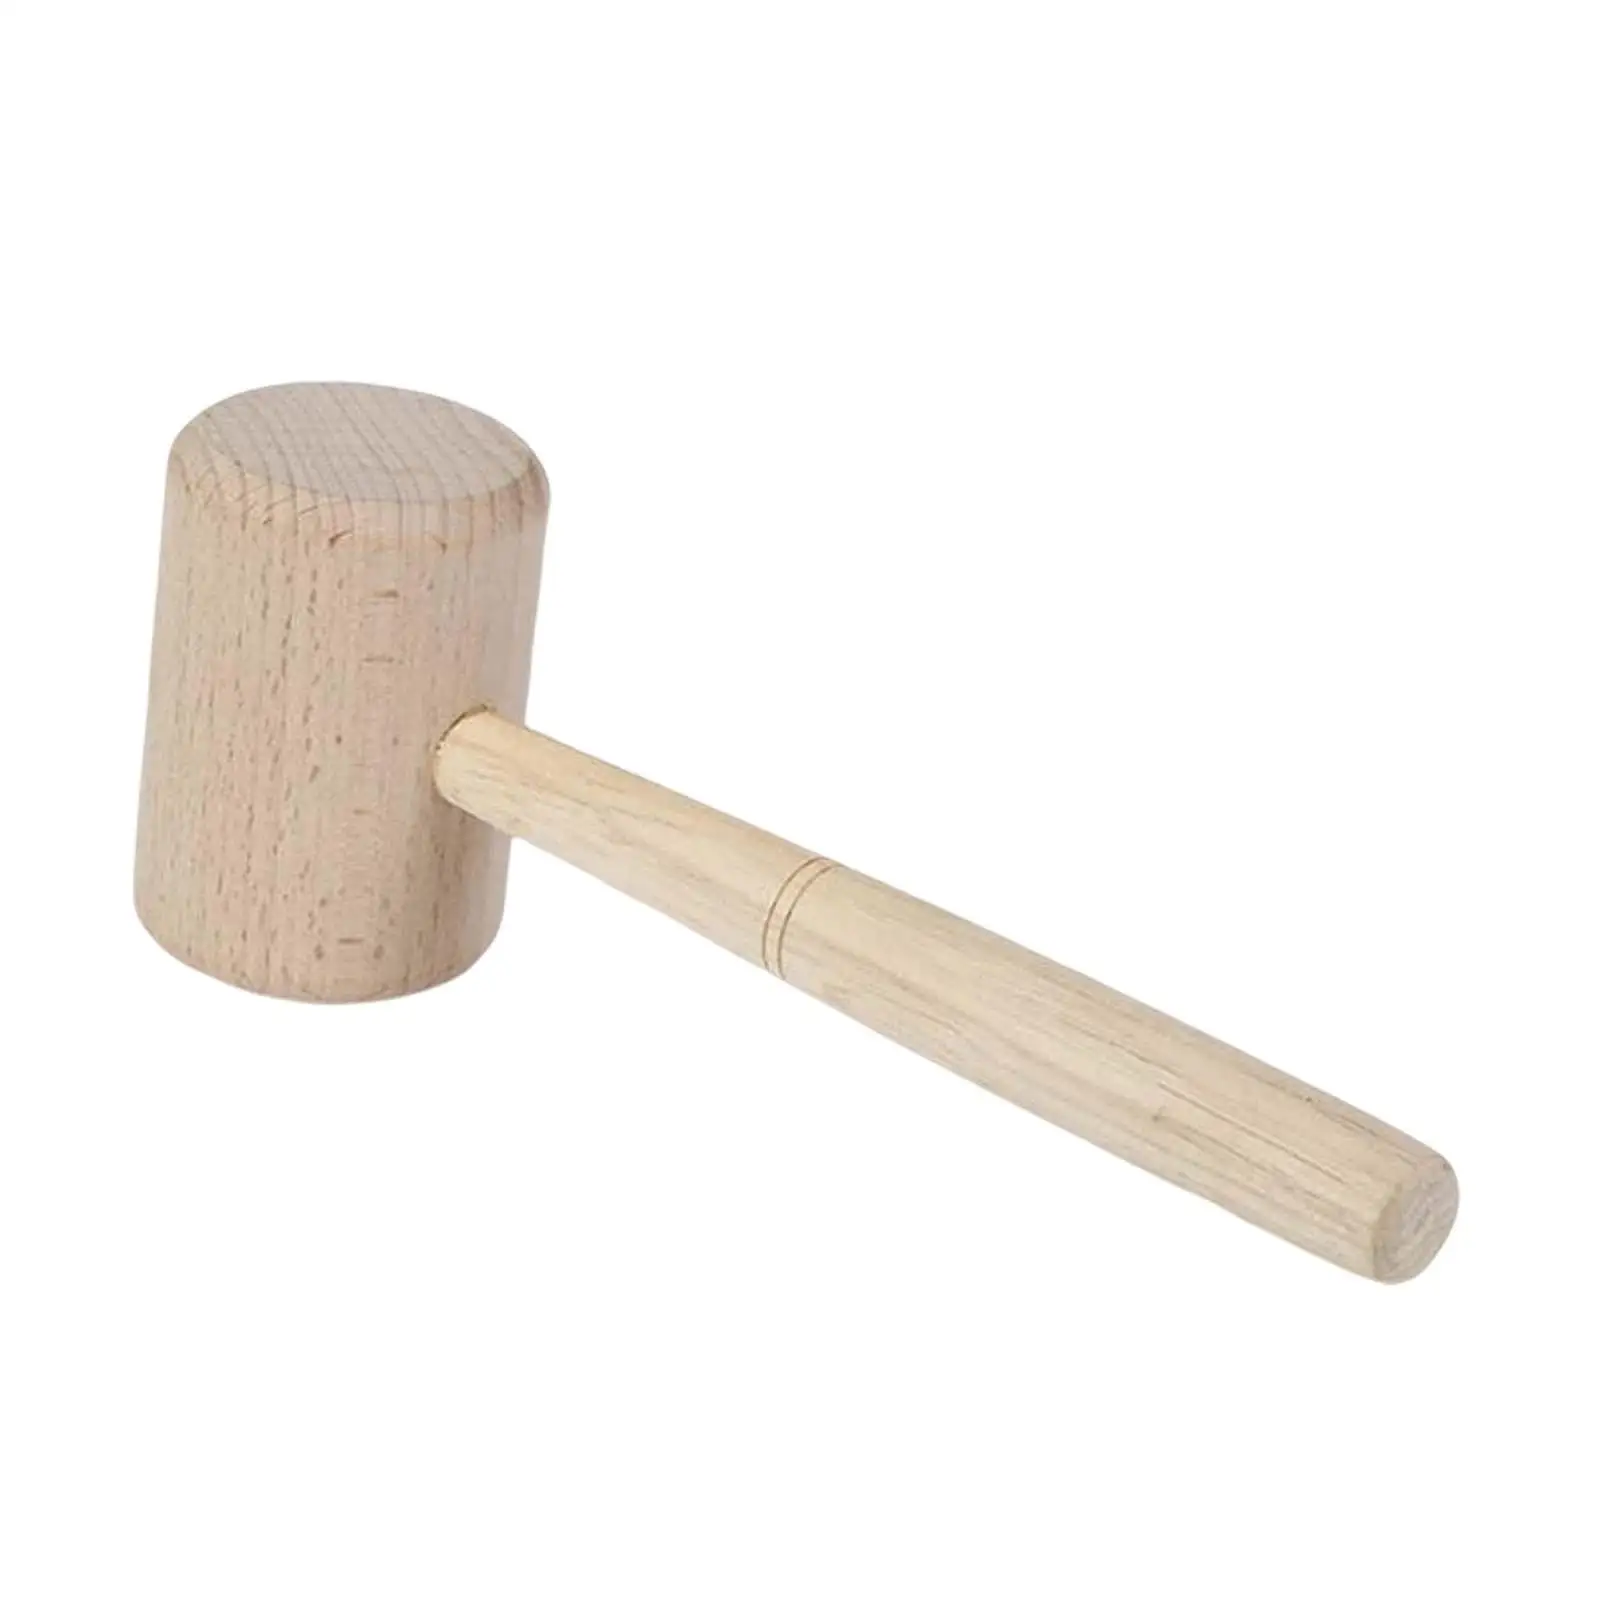 225mm Wooden Mallet Hammer Carving Mallet Anti Shedding Vintage Wooden Mallet Hand Hammer Accessory Wooden Hammer for Carving